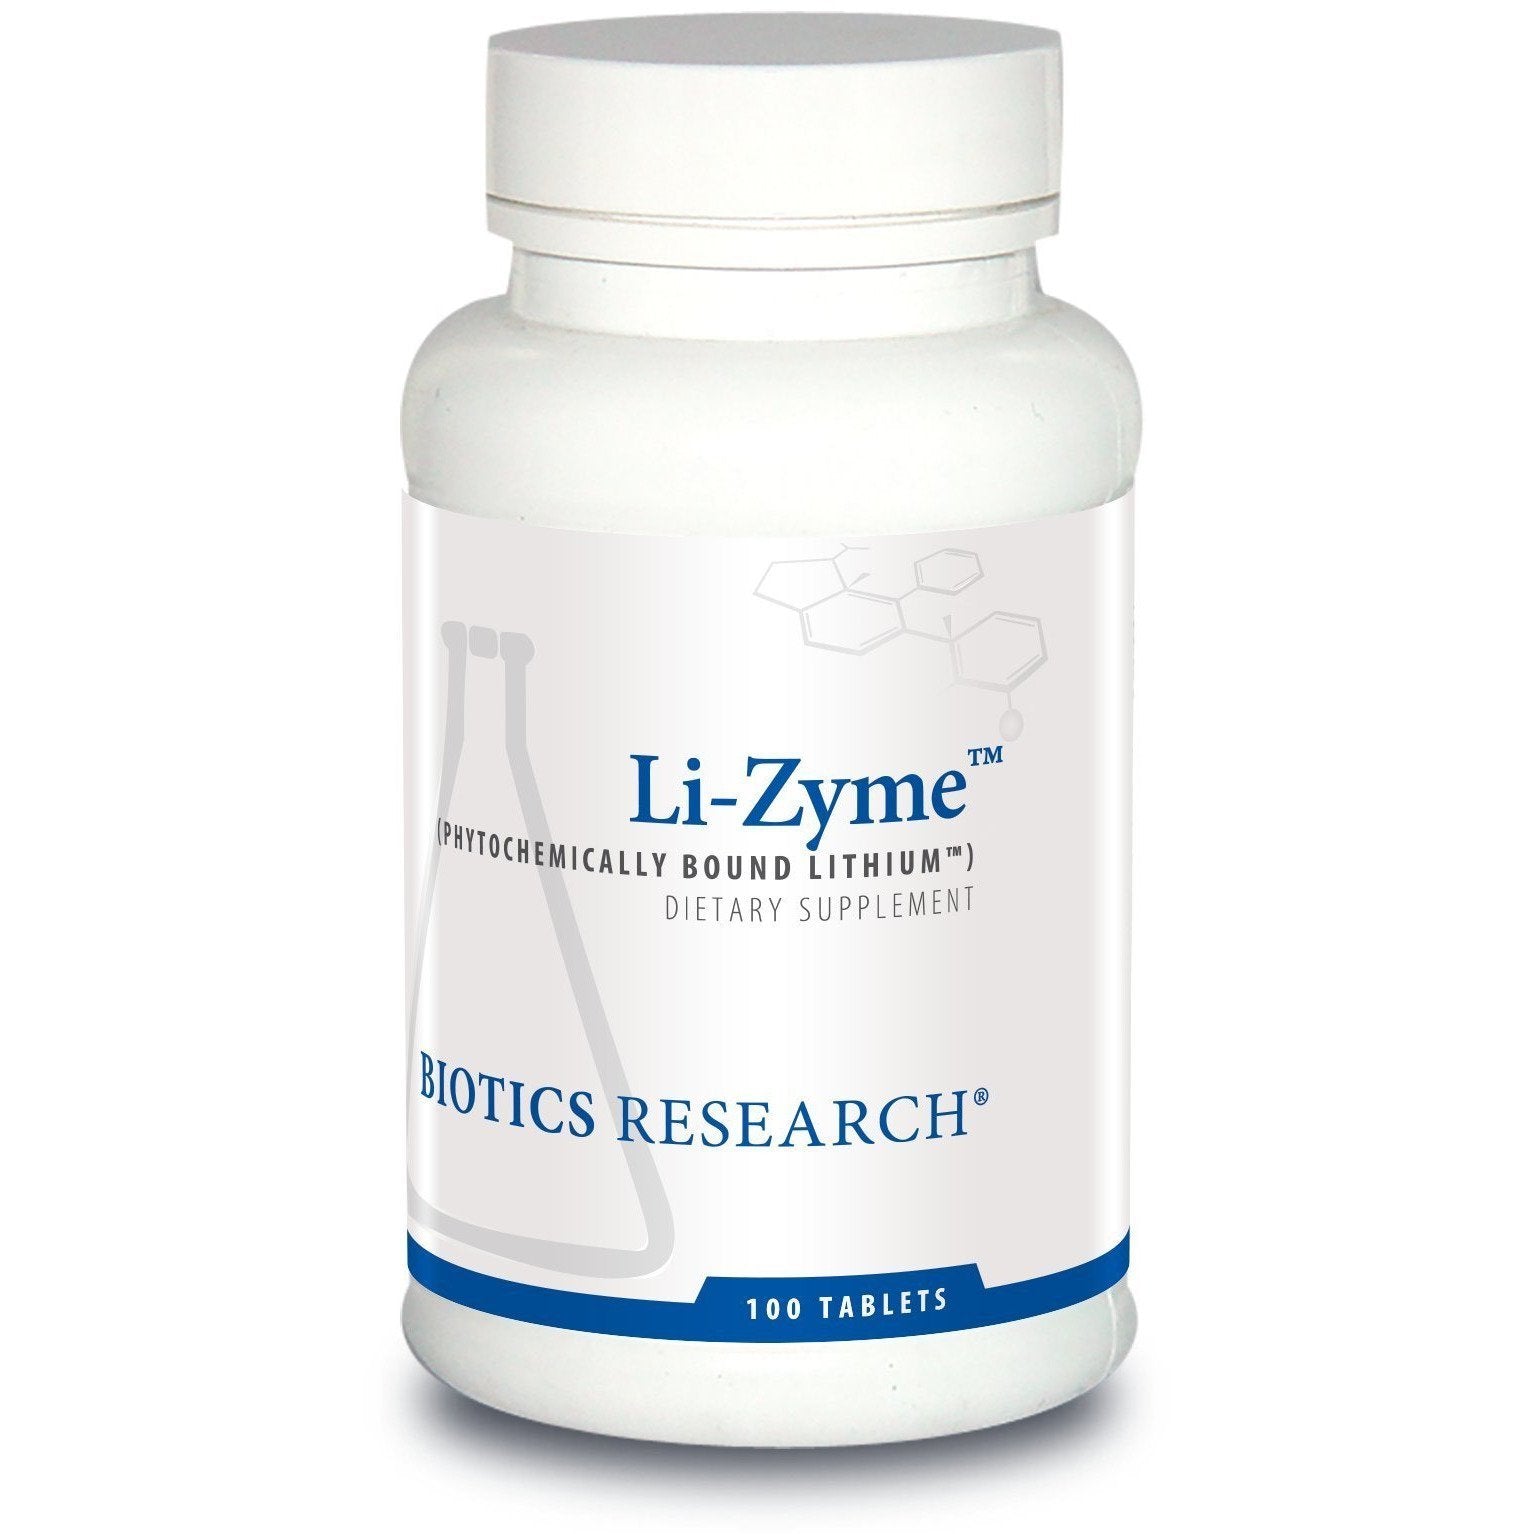 Li-Zyme 100 Tablets by Biotics Research - 2 Pack